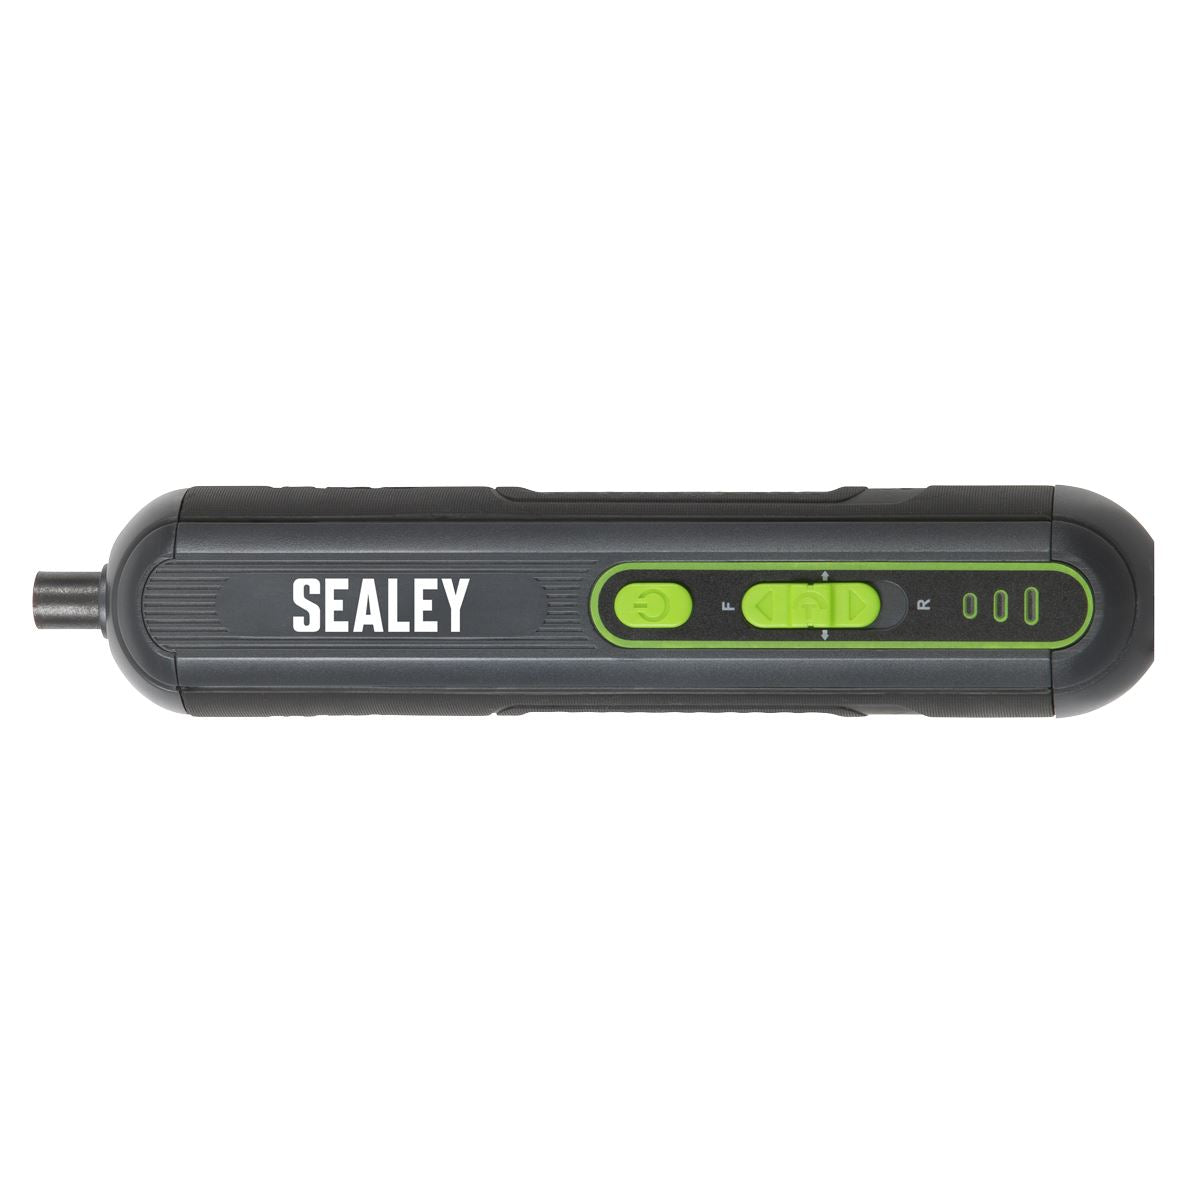 Sealey 4V Cordless Screwdriver with 25pc Bit Set